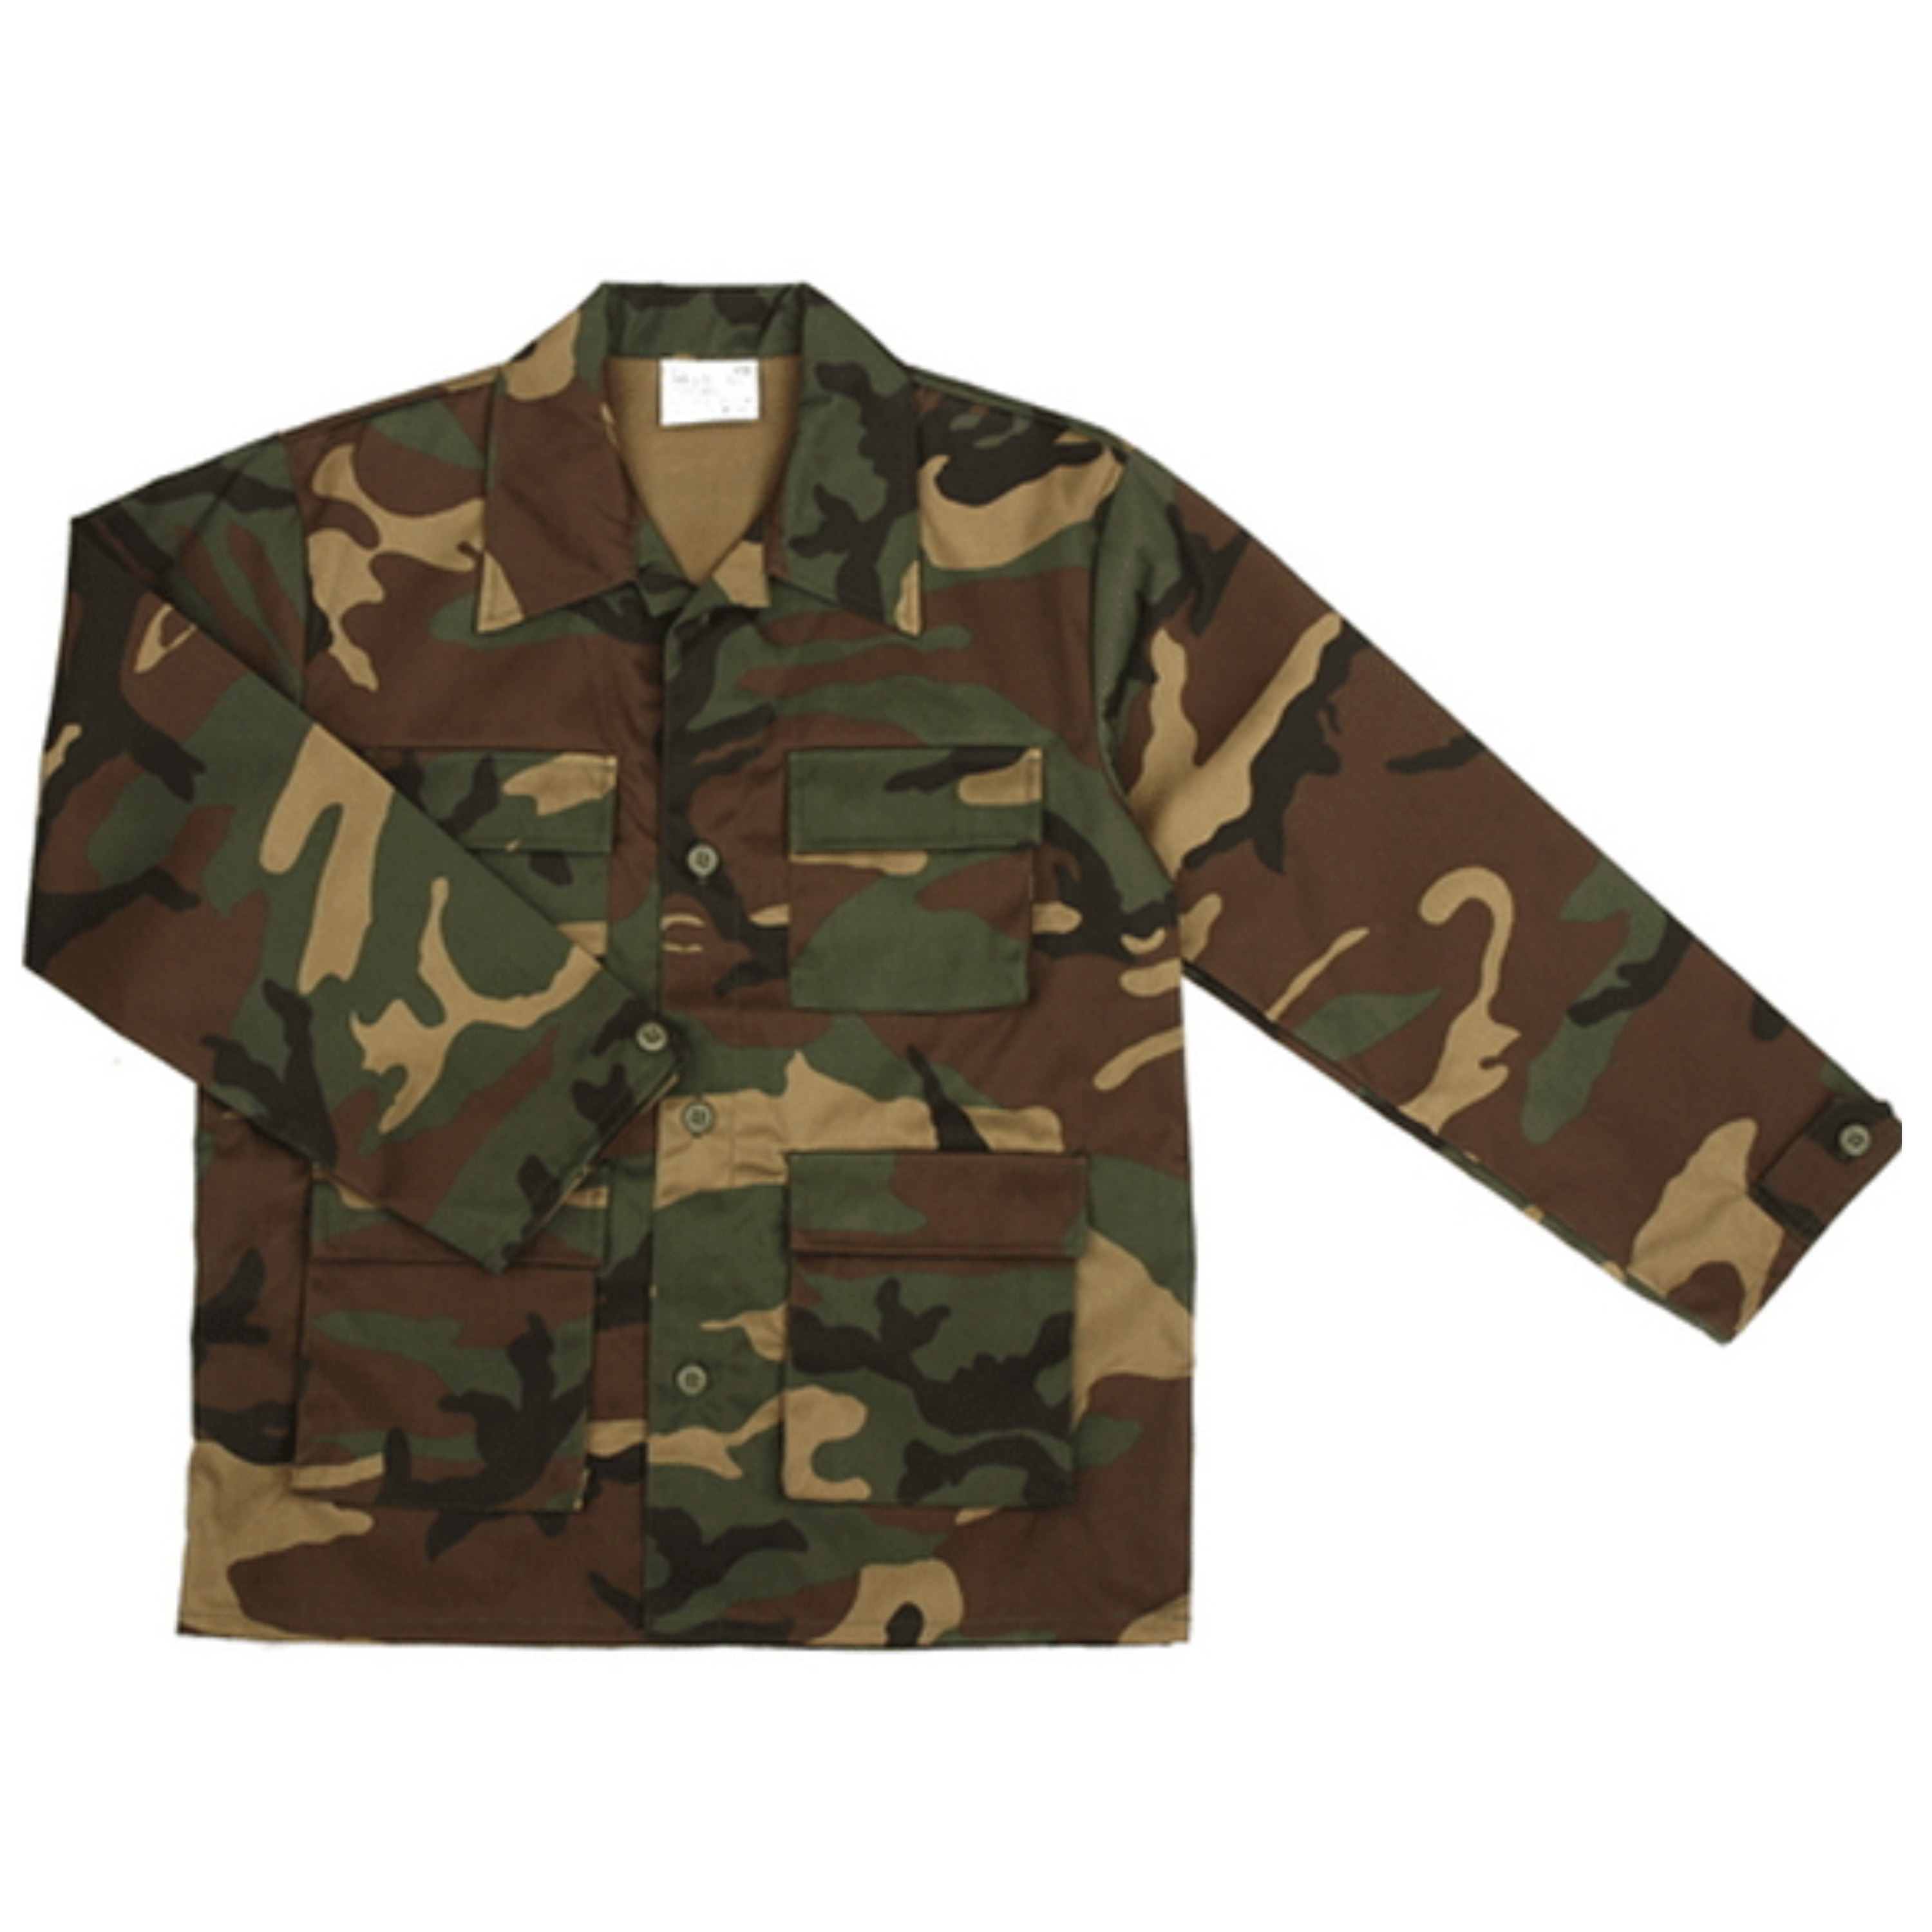 Army jas voor kinderen woodland camouflage XL (152-164) -